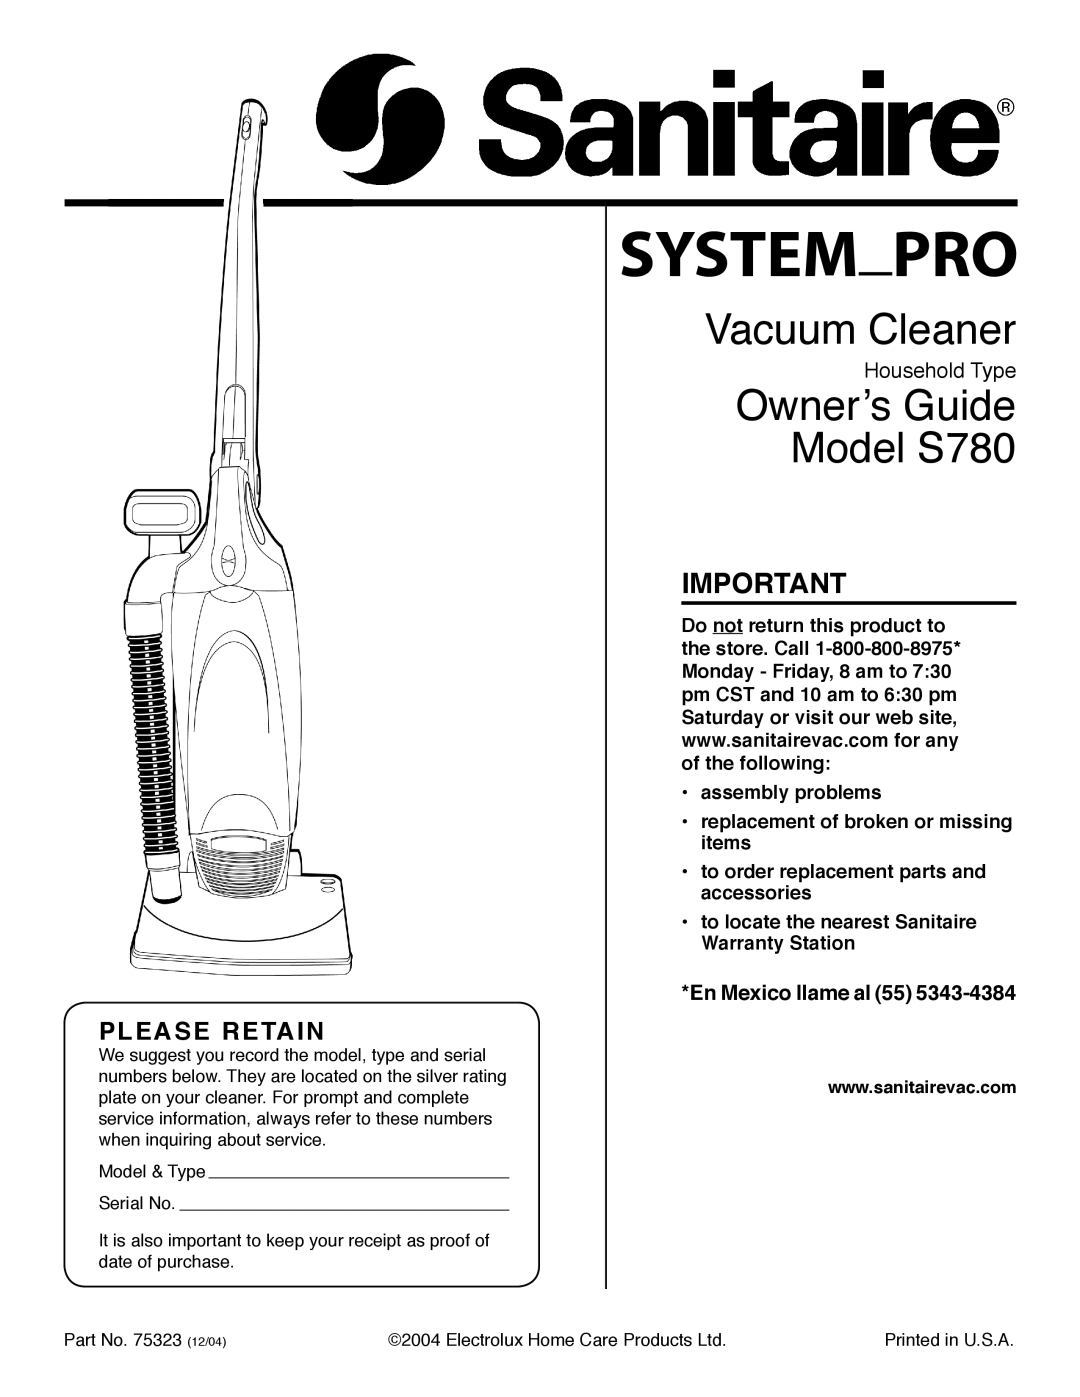 Sanitaire warranty En Mexico llame al, Vacuum Cleaner, Ownerʼs Guide Model S780, Please Retain, Household Type 